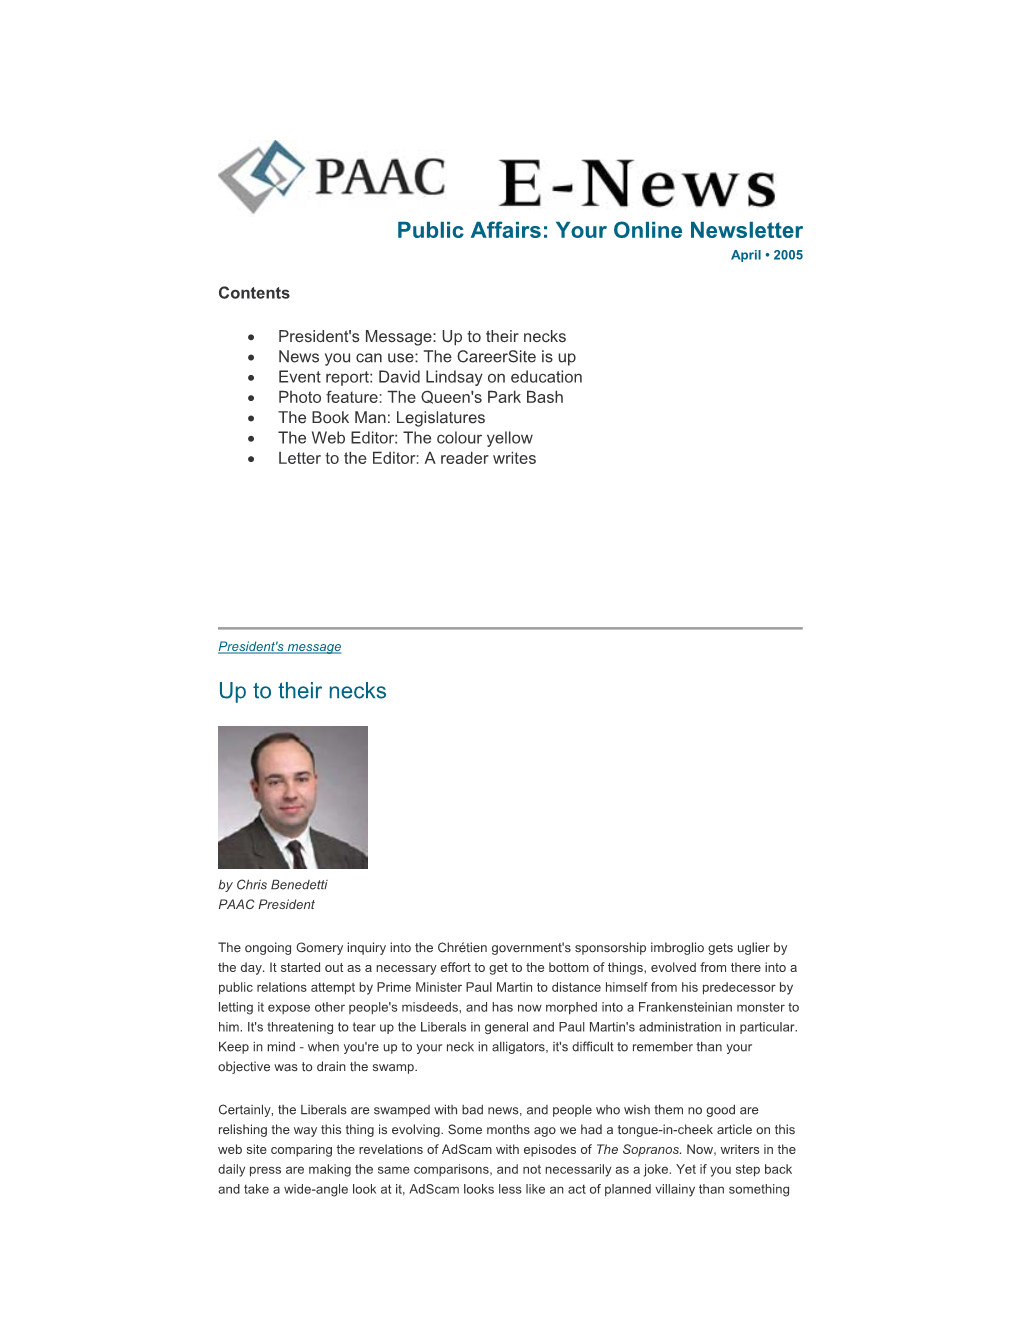 PAAC E-News, April, 2005